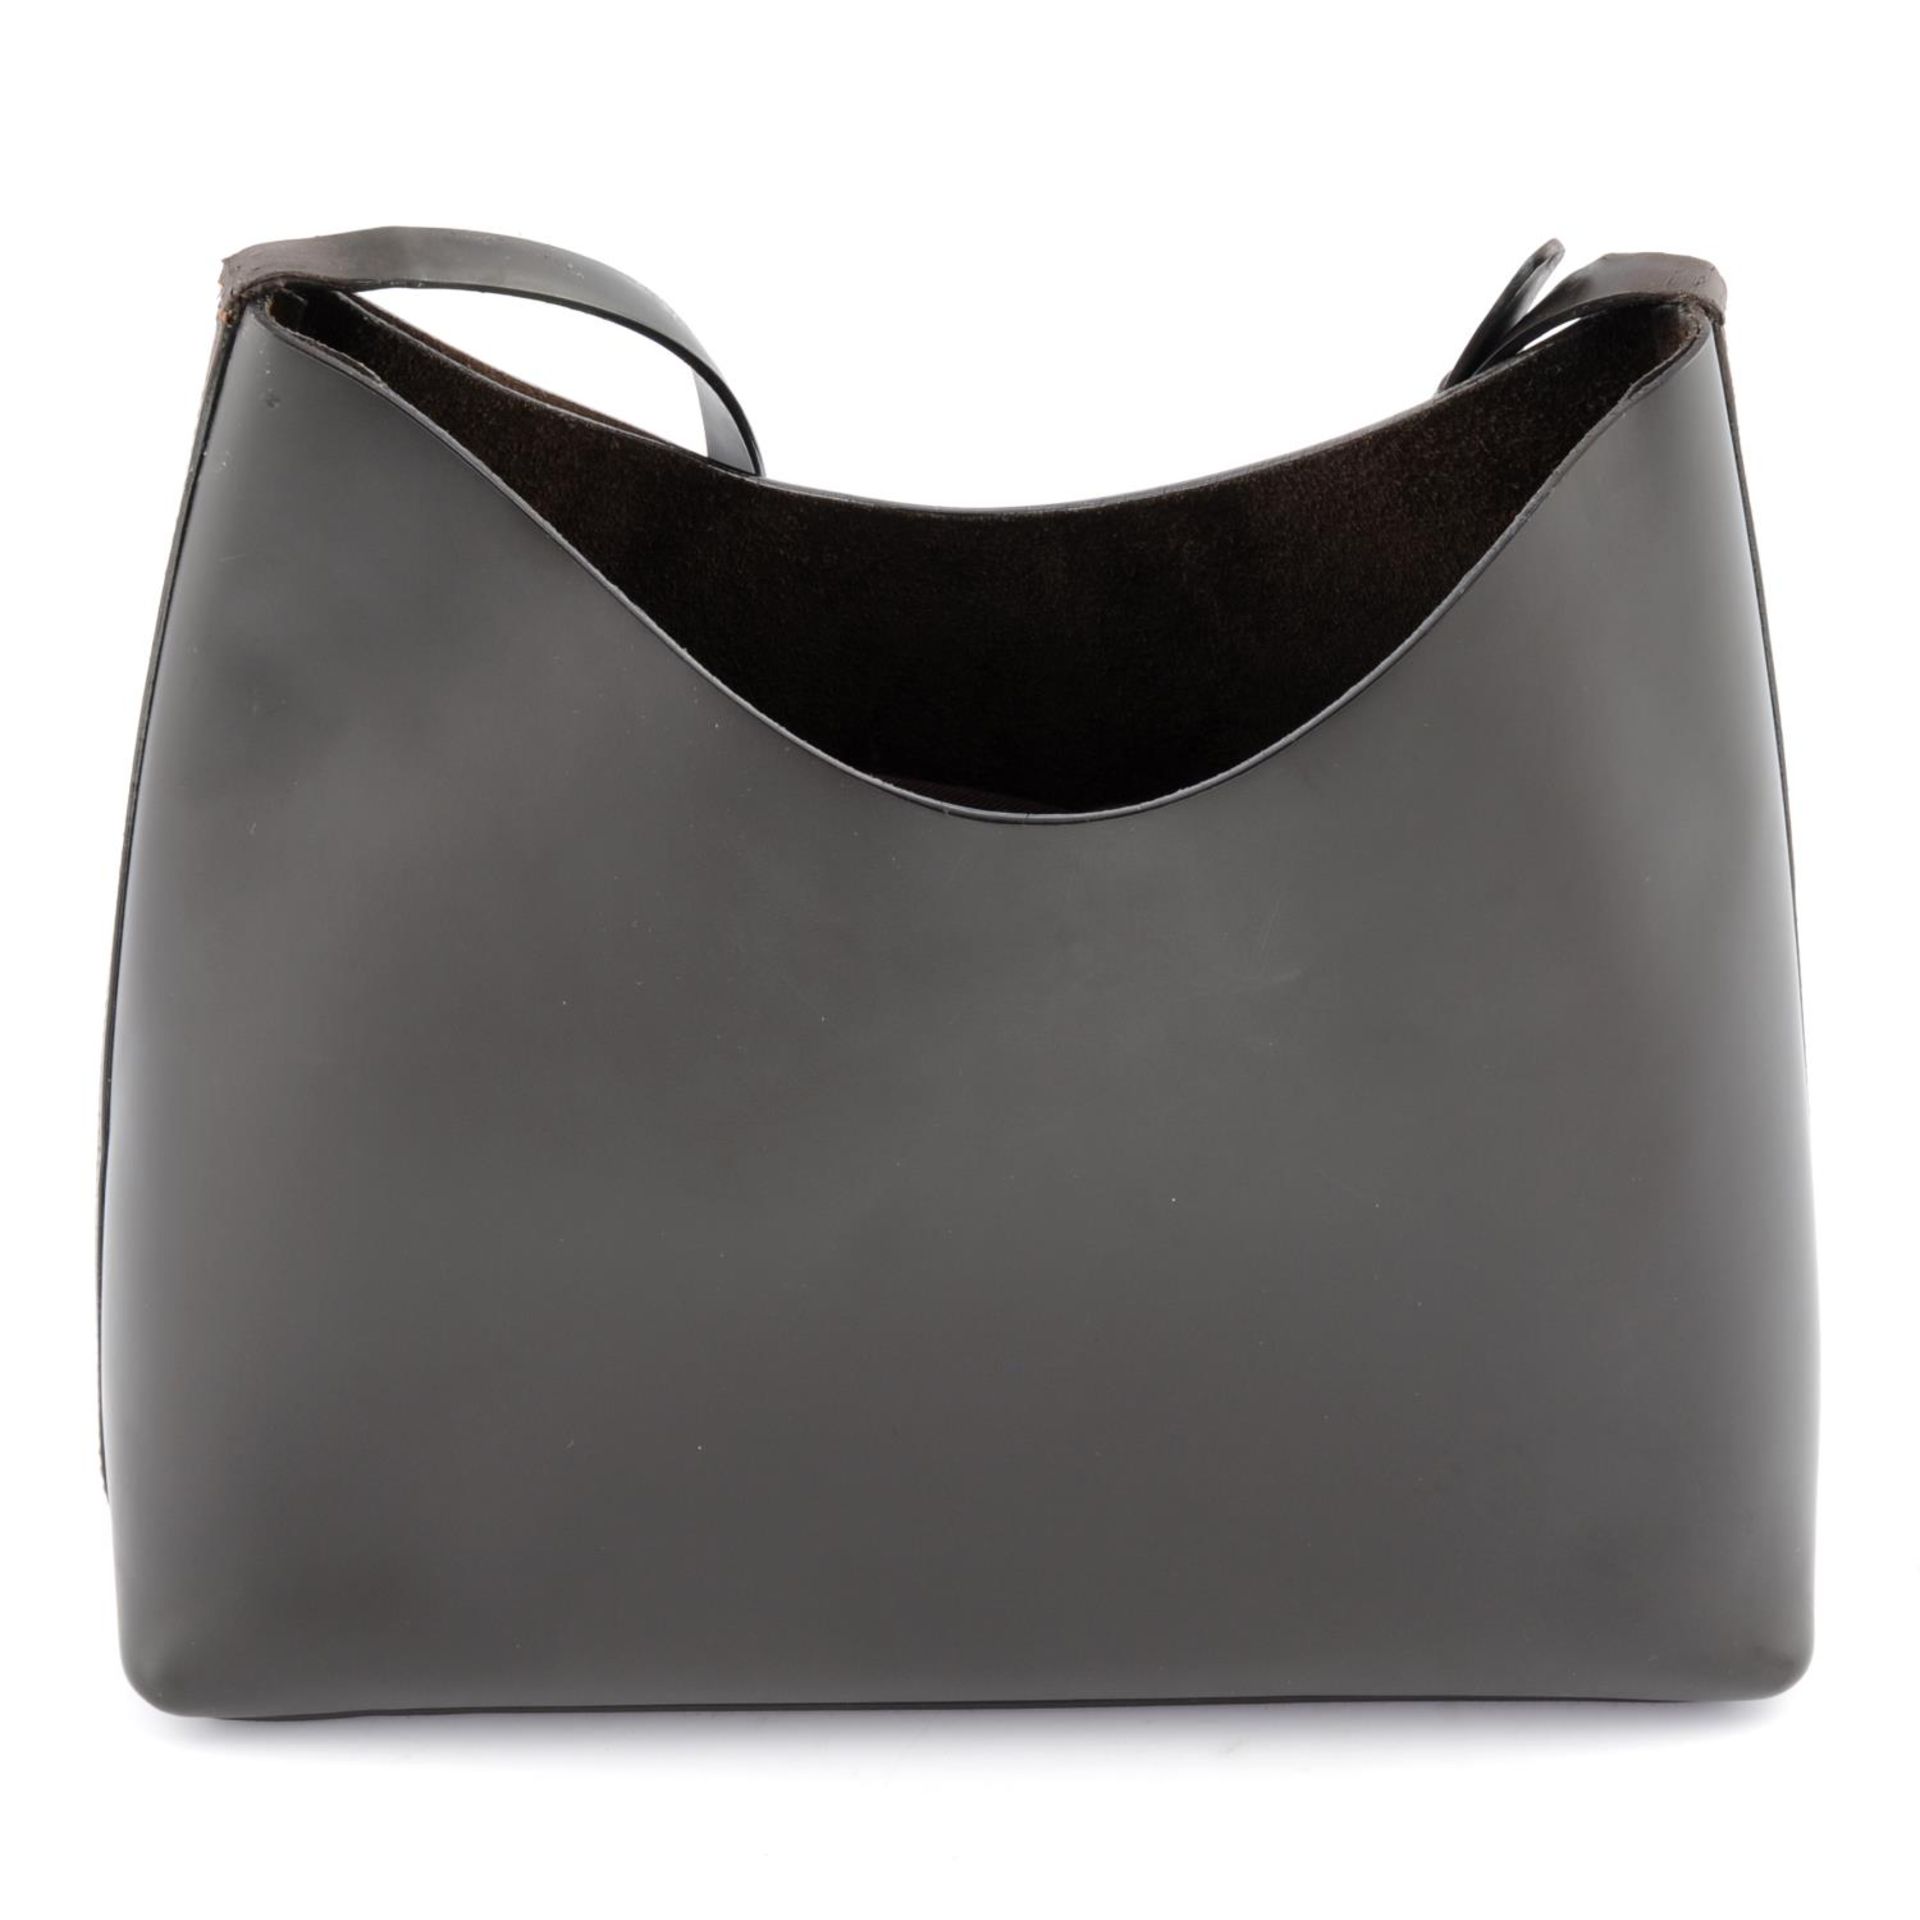 GUCCI - a brown leather handbag.